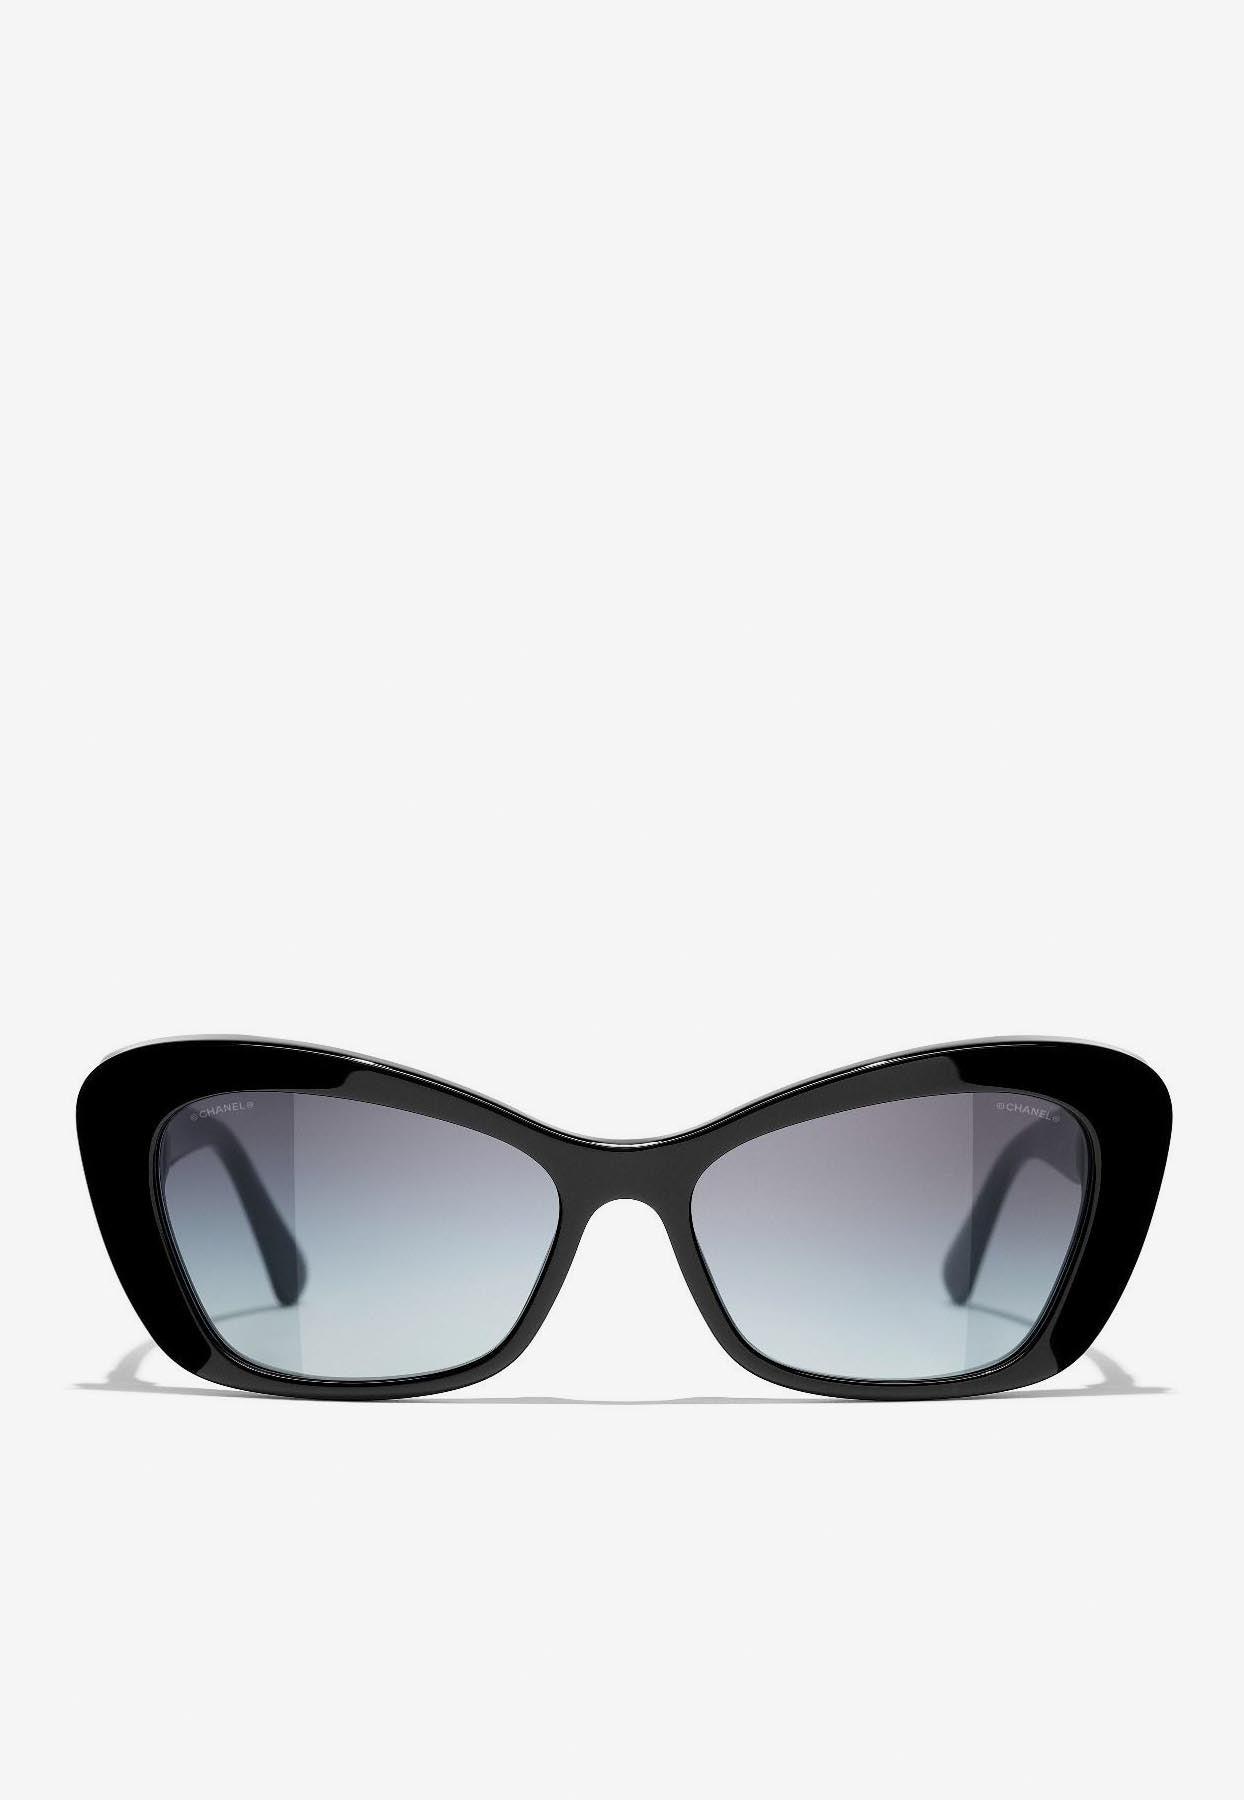 Chanel Cat Eye Pearl Sunglasses in Black